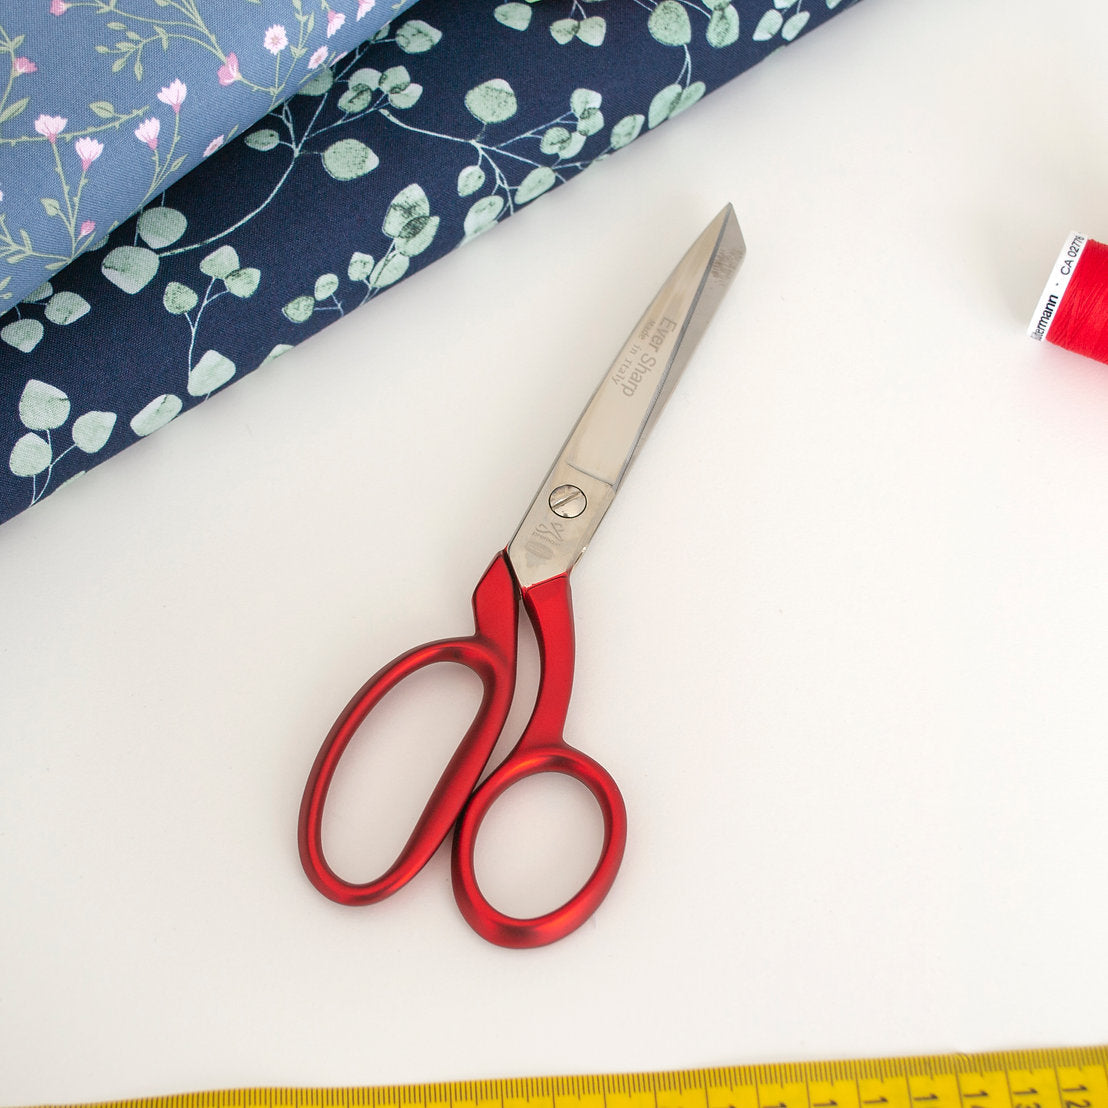 Sewing Scissors 20 cm Premax ALWAYS SHARP 82603 | Precise Cut and Guaranteed Durability